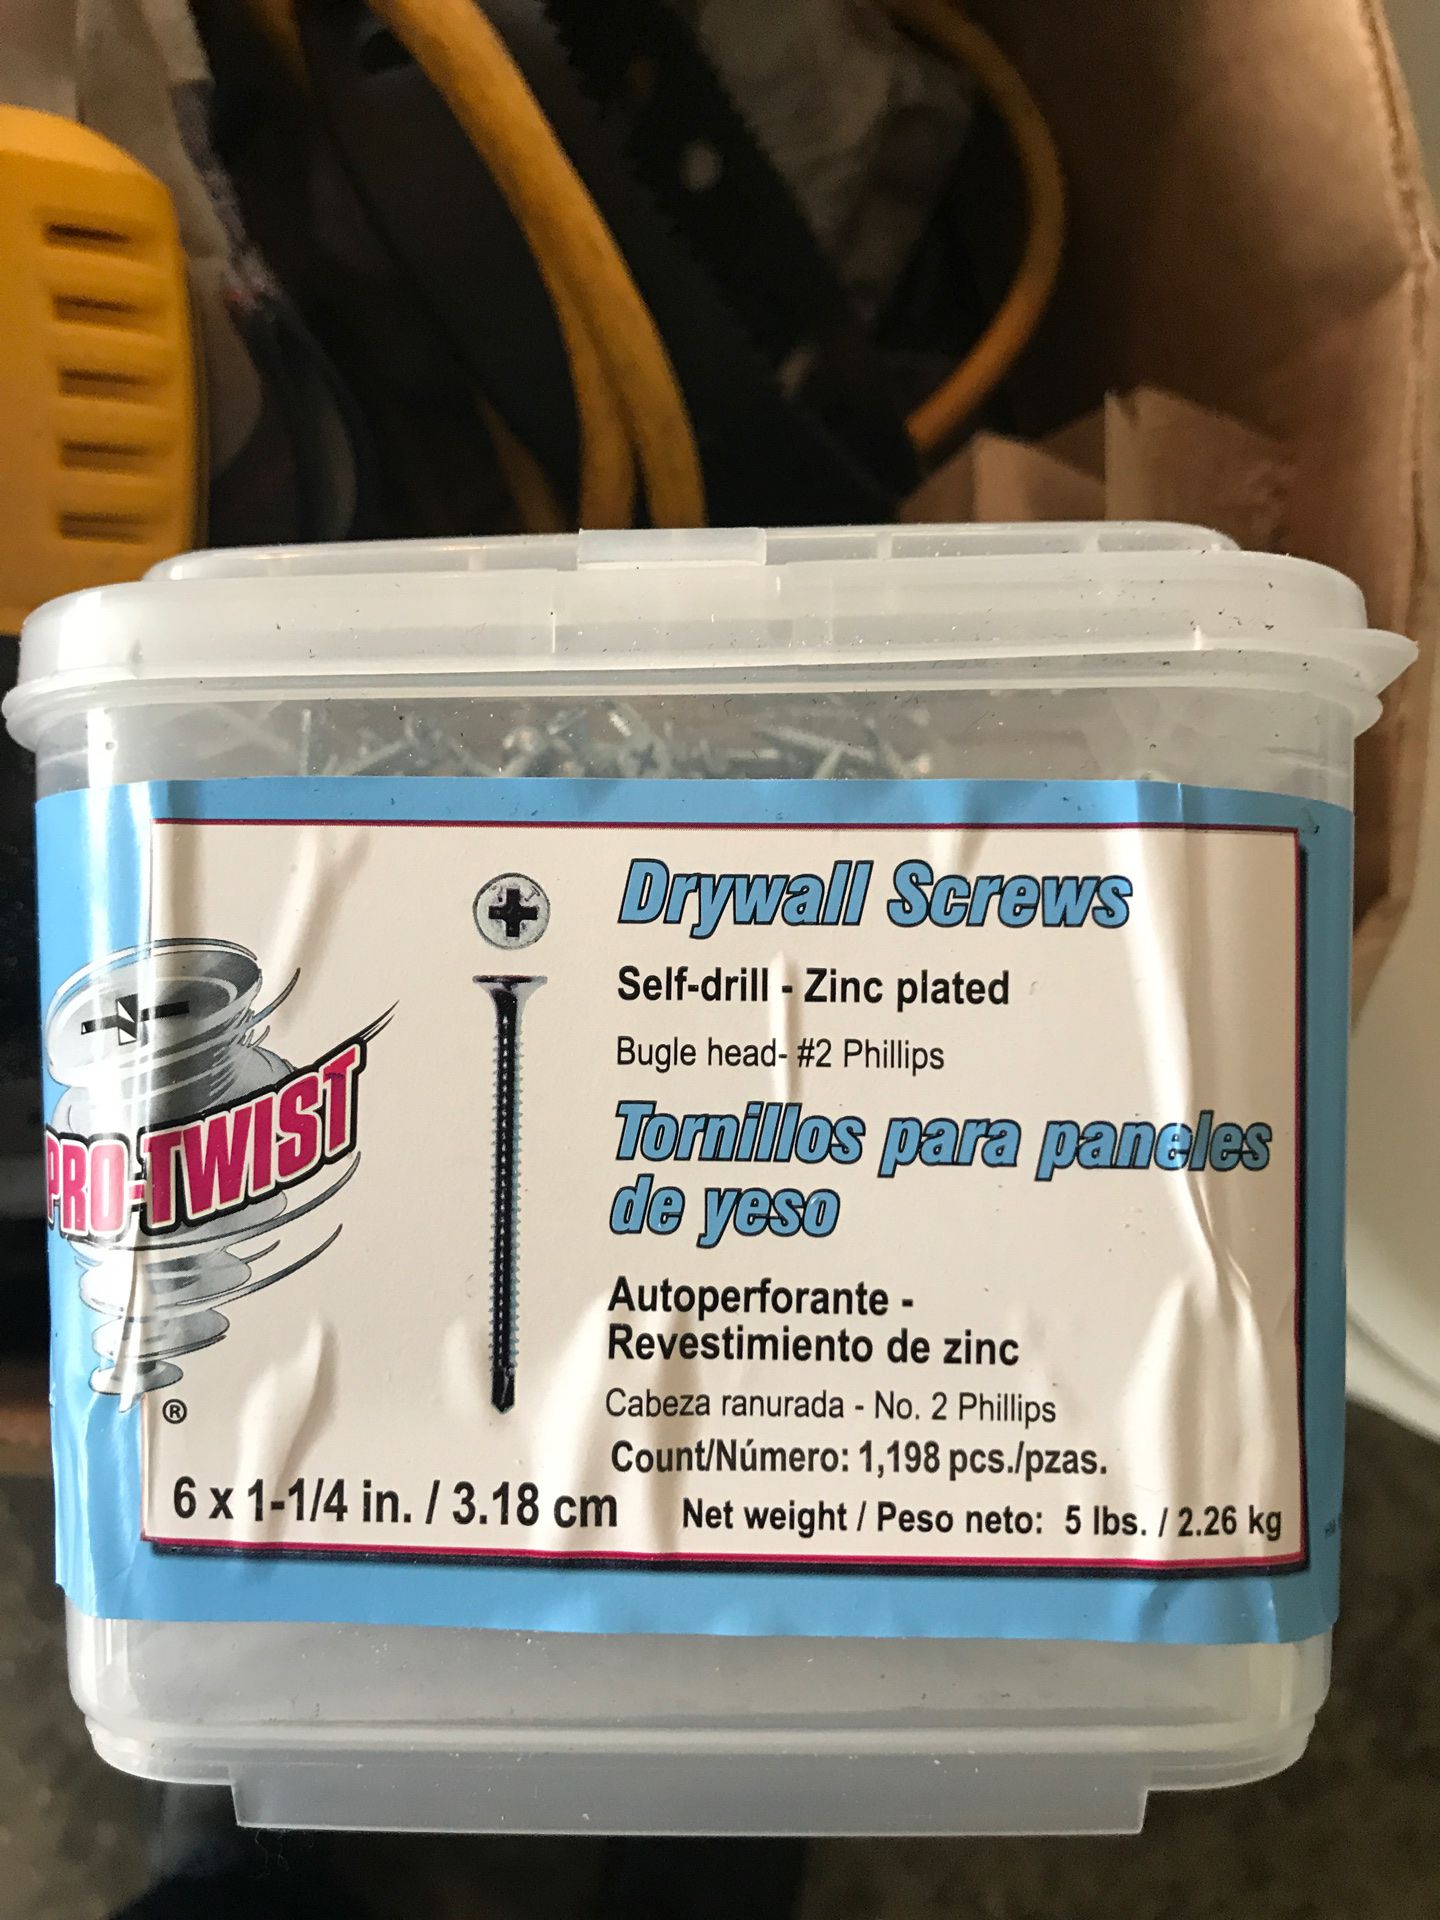 Drywall Screws 6x 1 1/4” a Self Drill - Zinc Plated